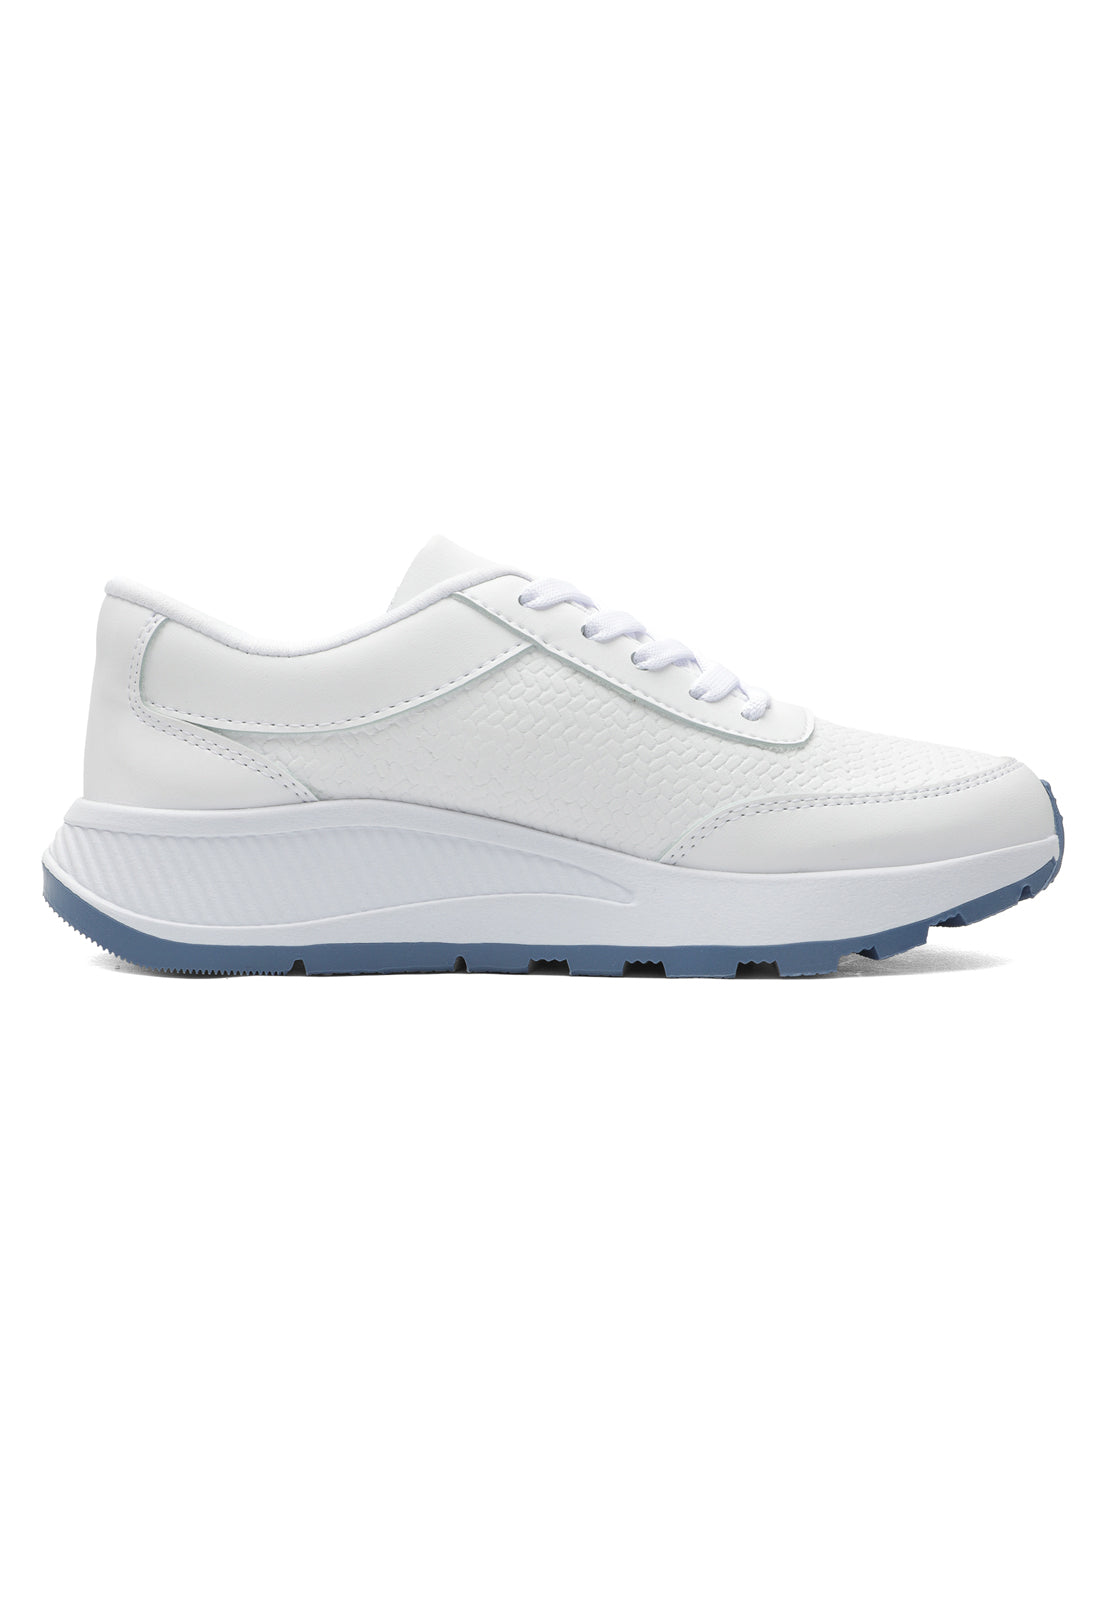 Tenis Sneakers Dama Blanco-Azul Tellenzi G-45